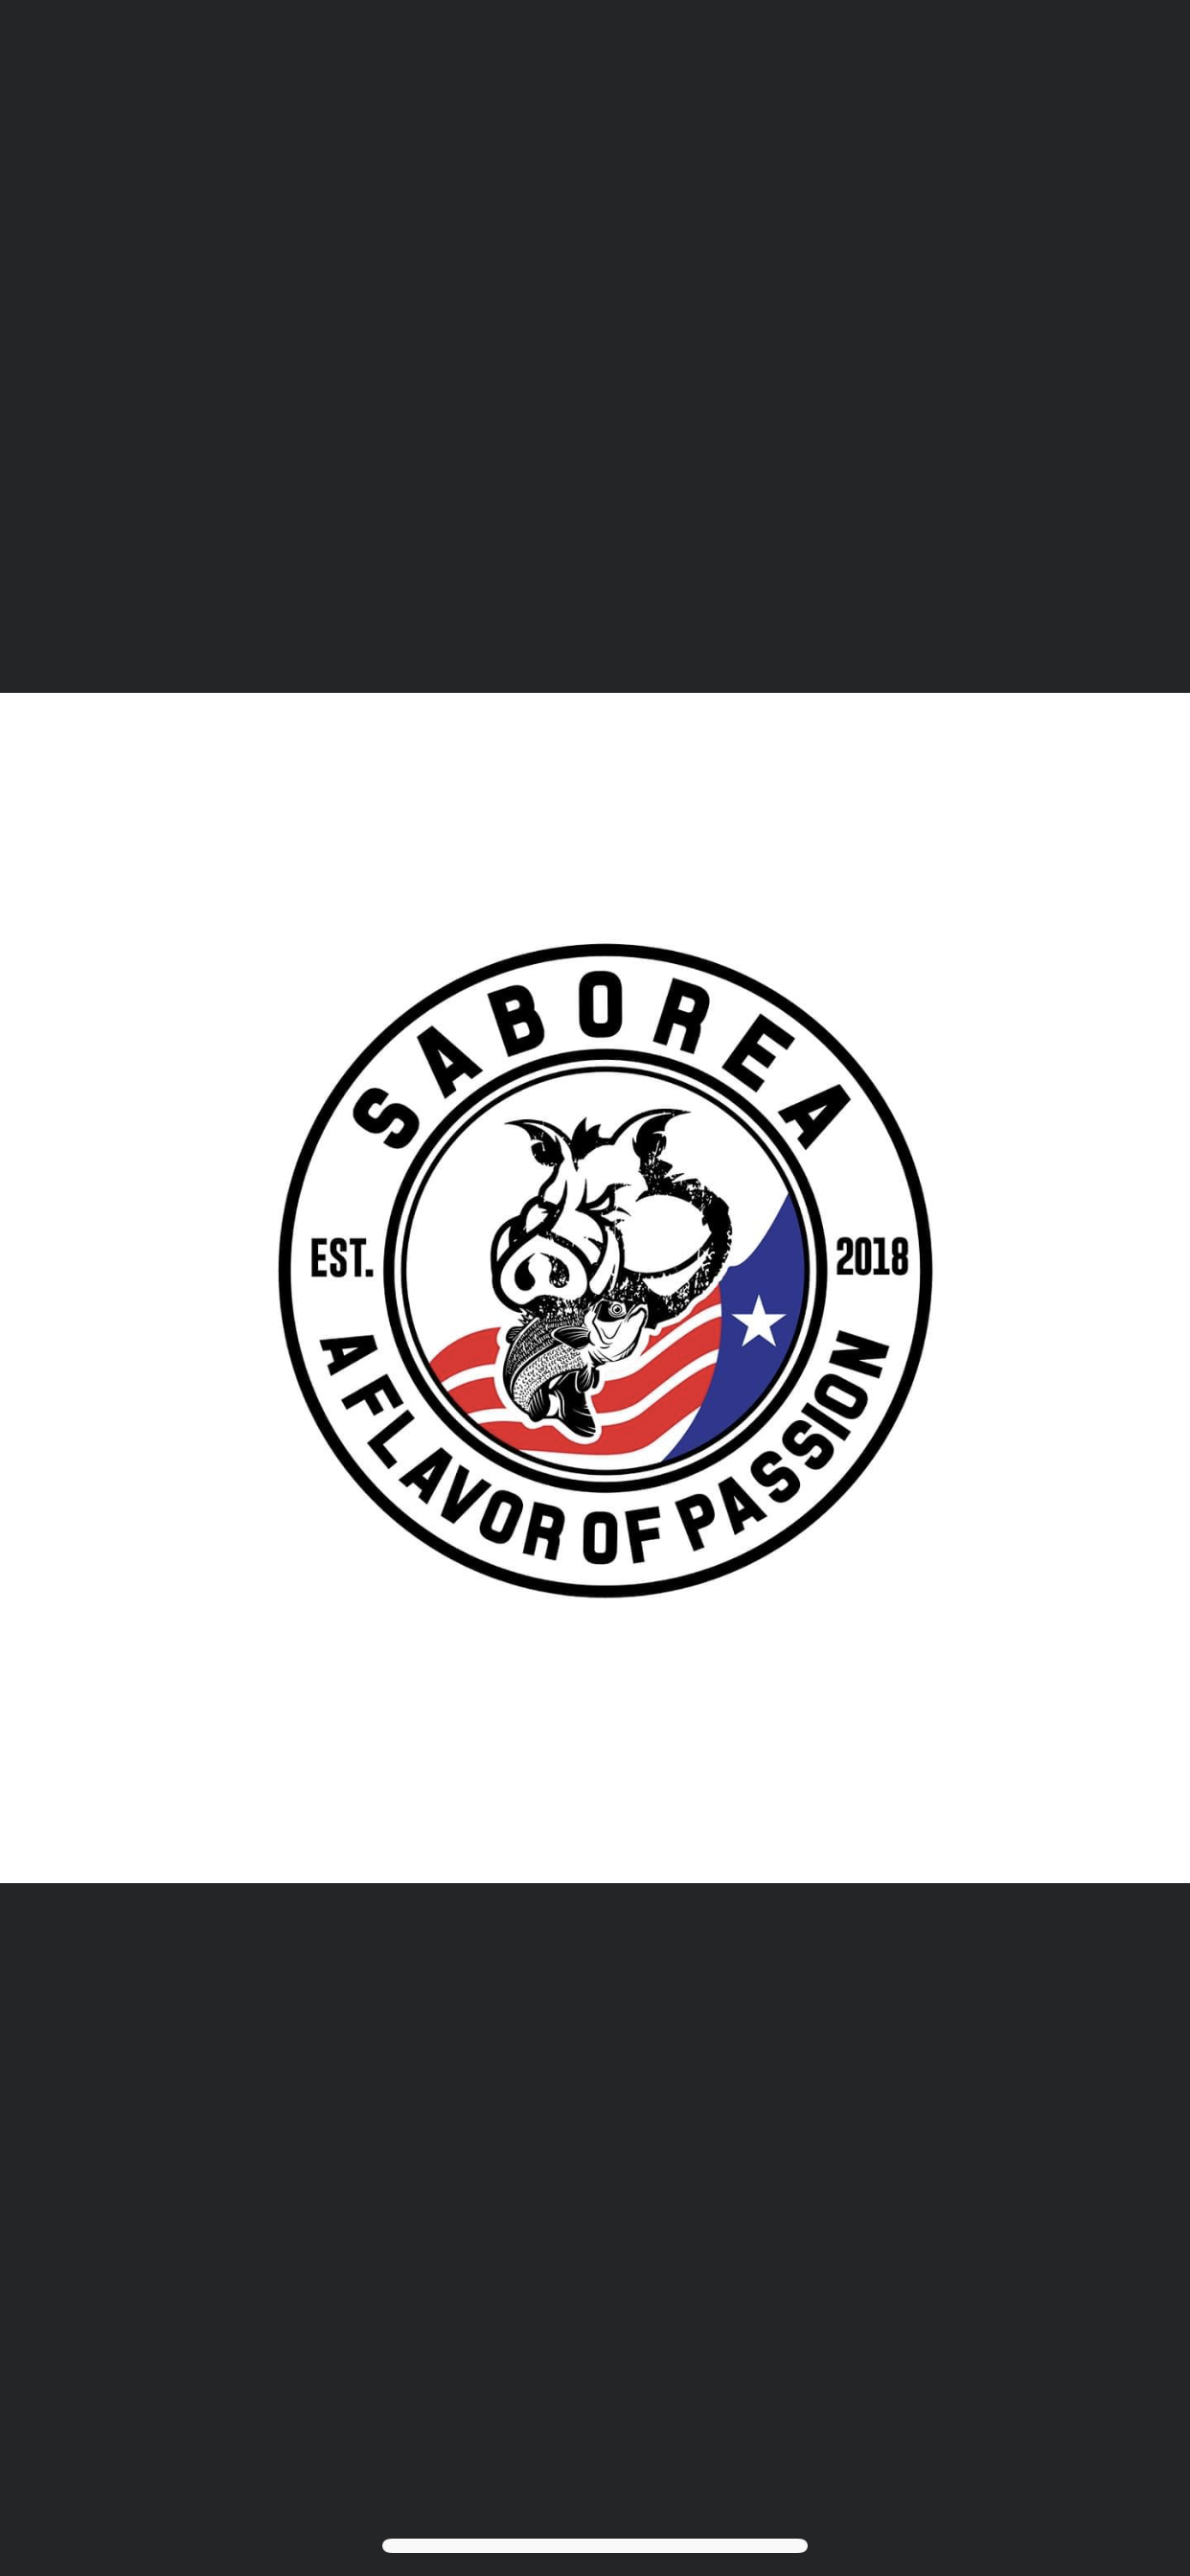 Saborea_old food truck profile image